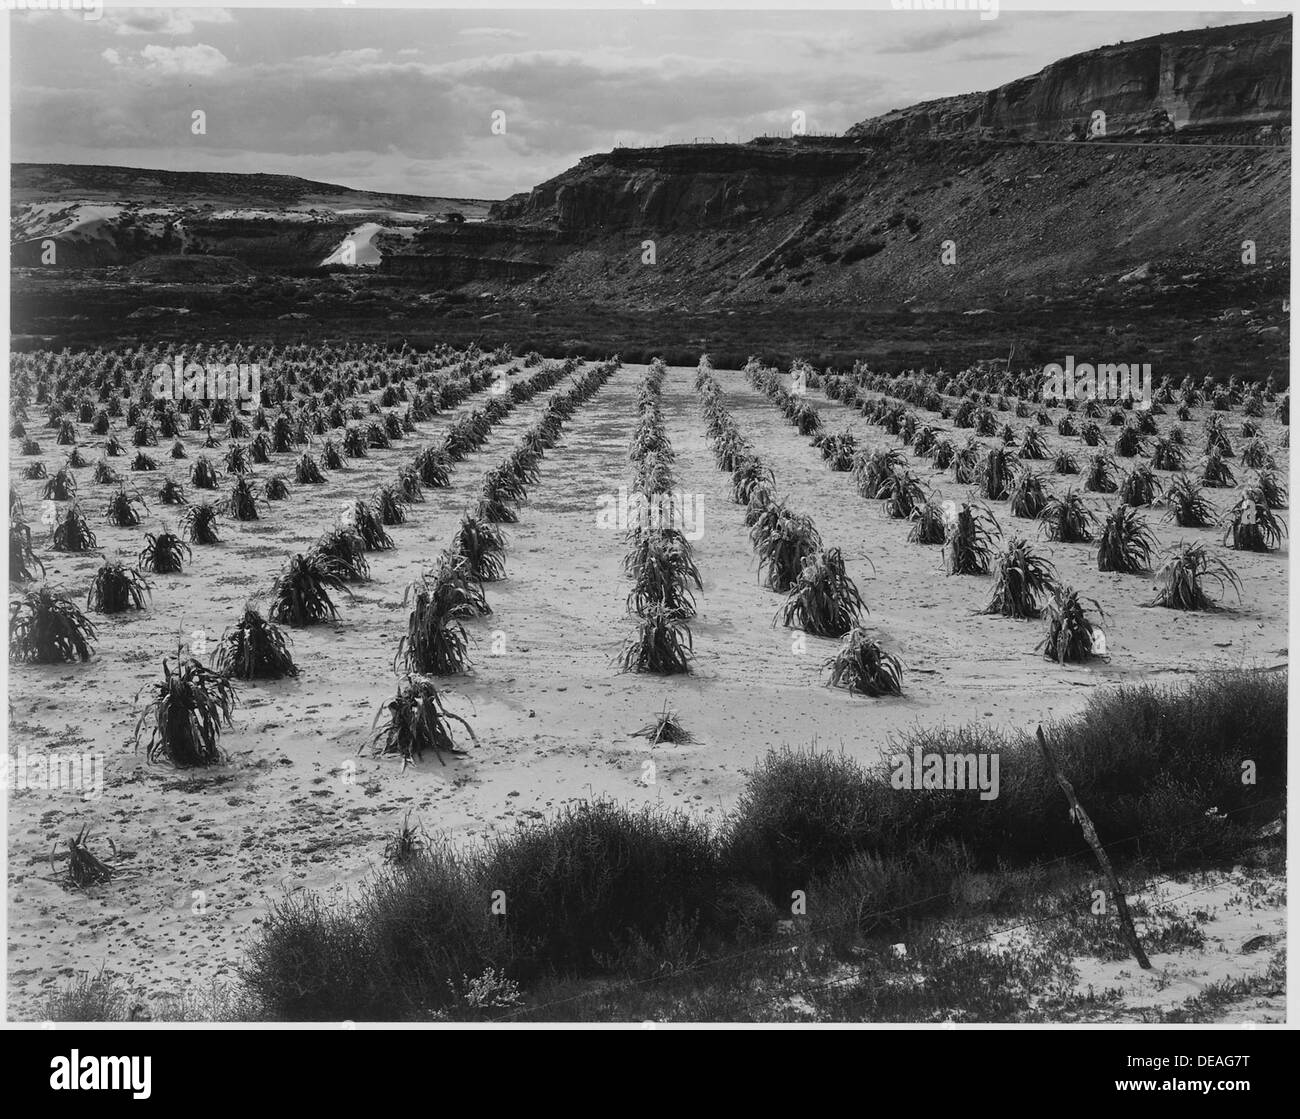 Looking across rows of corn, cliff in background, Corn Field, Indian Farm near Tuba City, Arizona, in Rain, 1941. , 194 519988 Stock Photo